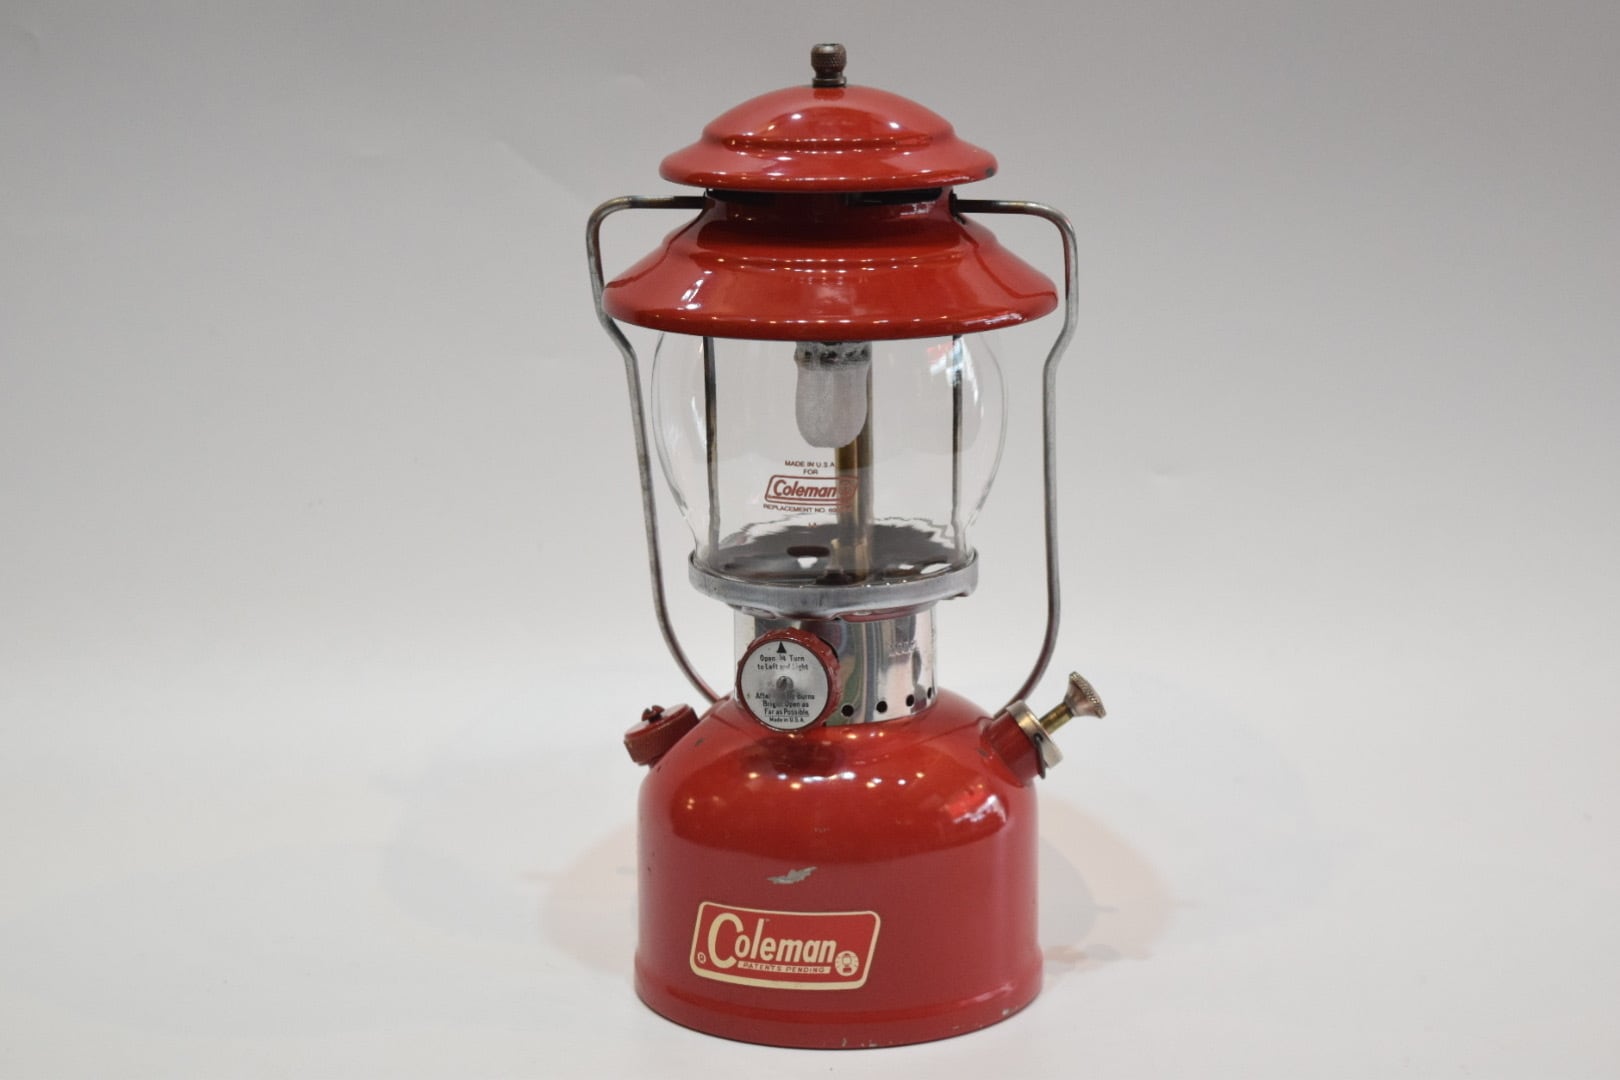 USED Works! 60s Vintage Coleman Lantern 200A 